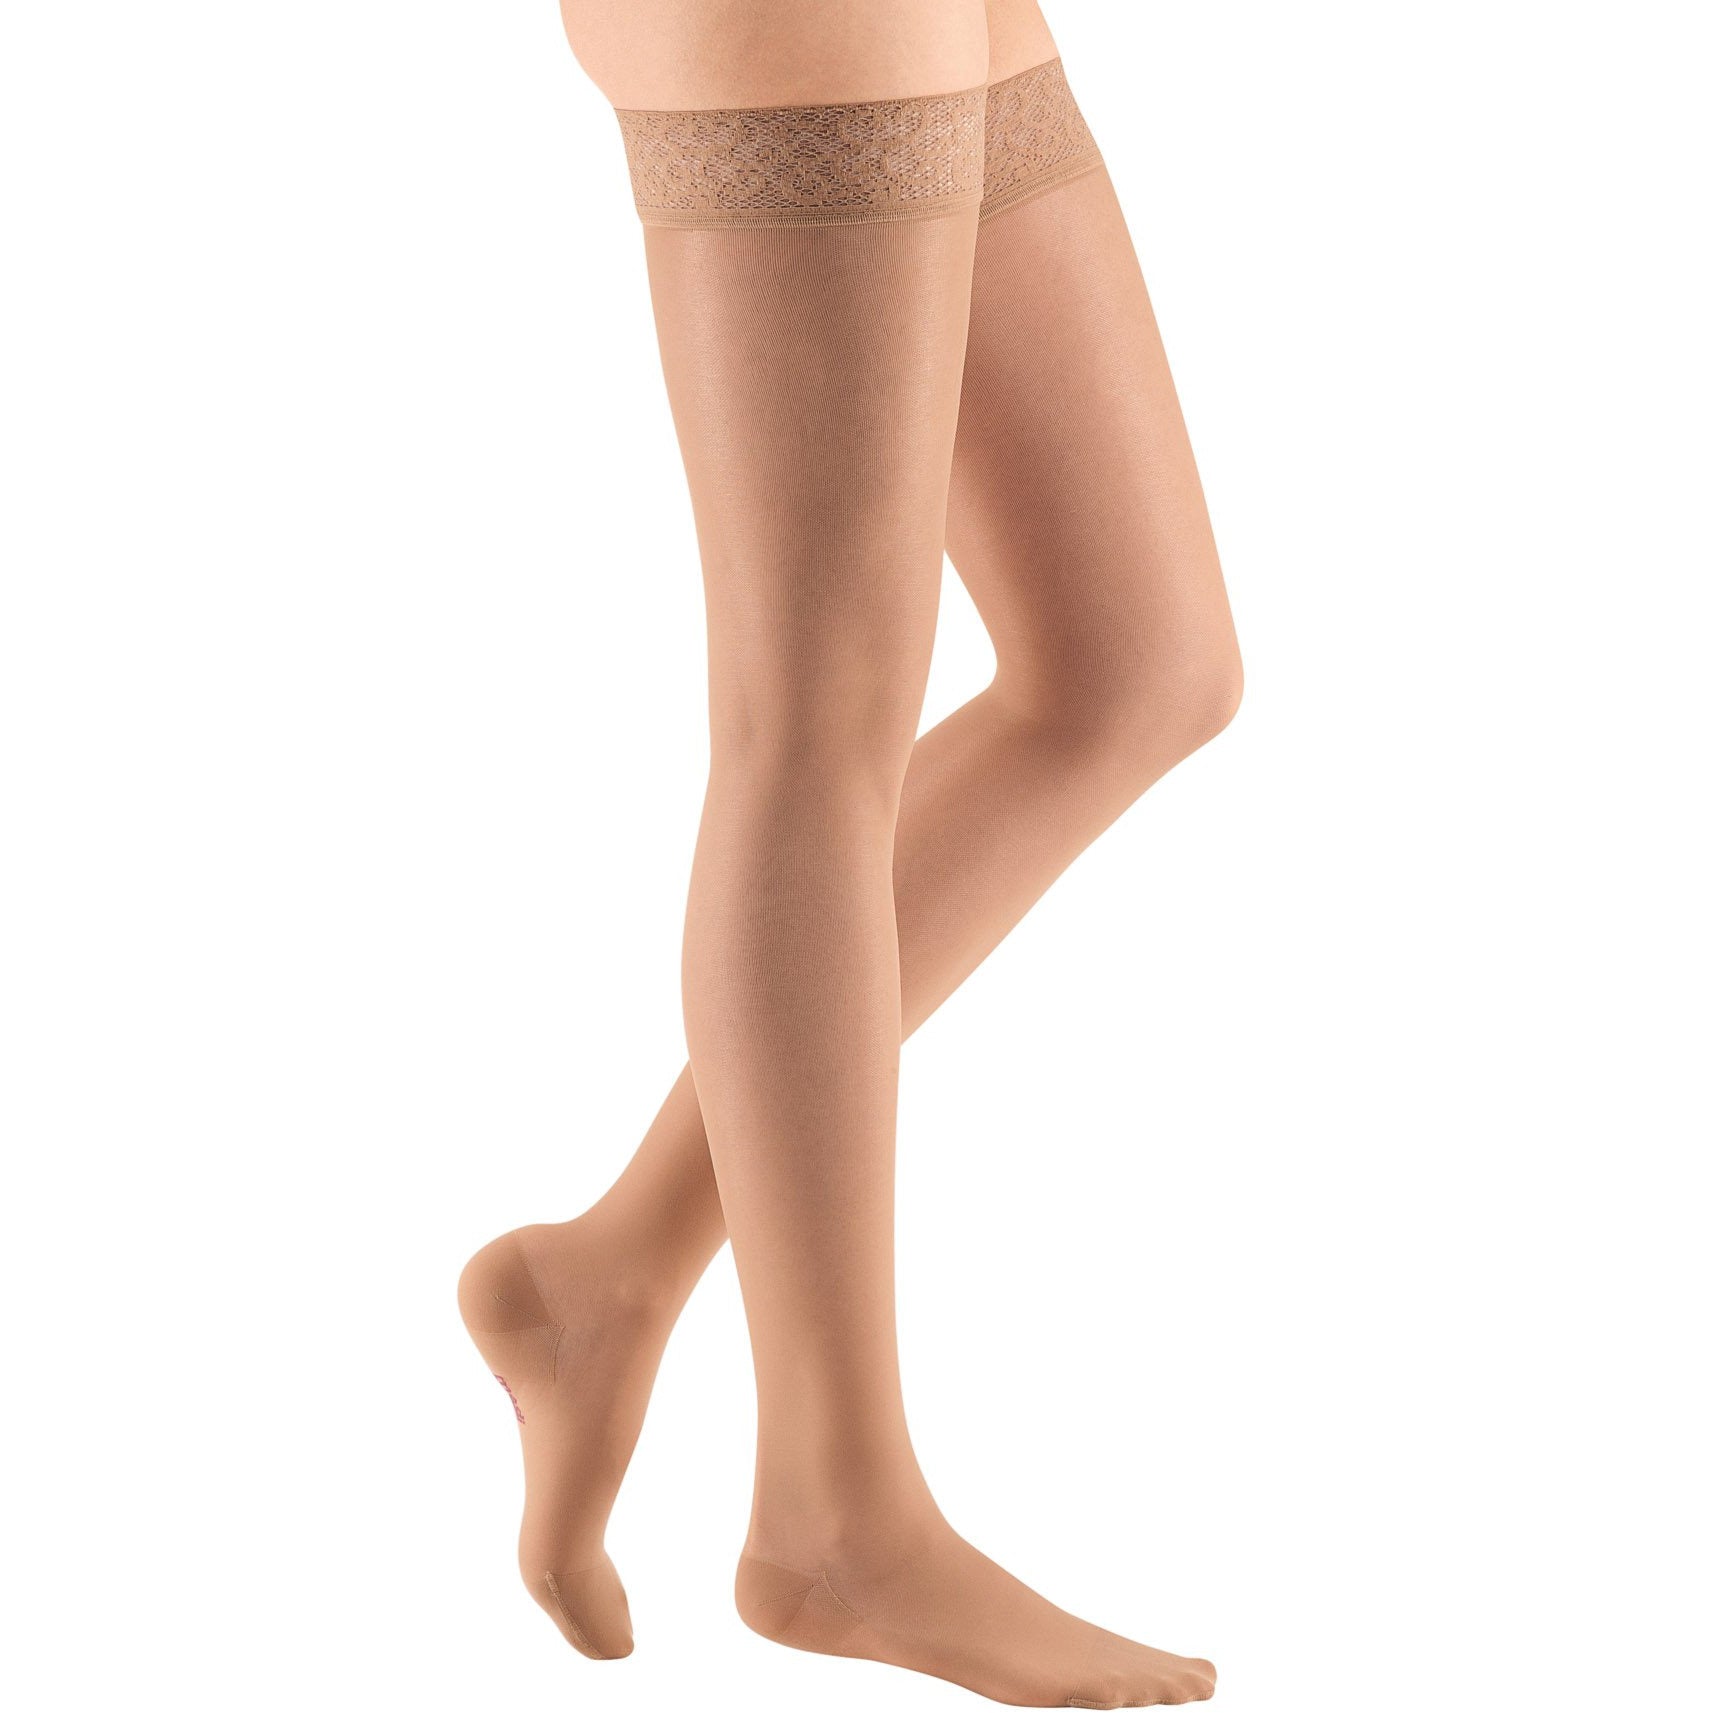 Buy QSN STUFF Woman Spanex Lace stocking (Beige-Beige, Size Fit M